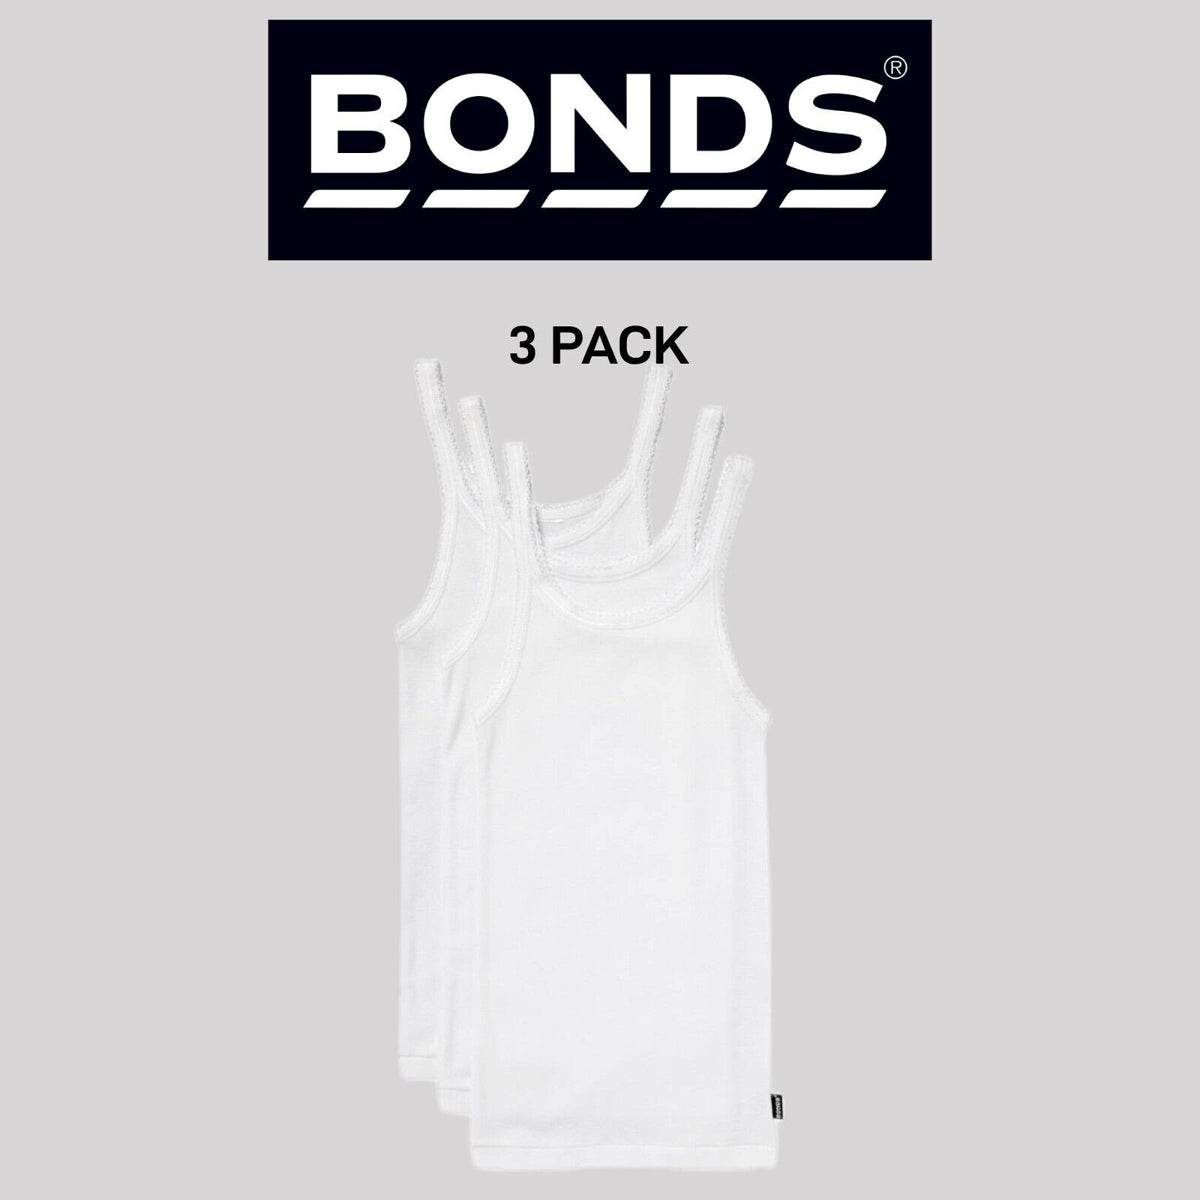 Bonds Girls Teena Singlet Super Soft Cotton Comfortable Top 3 Pack UYG43A